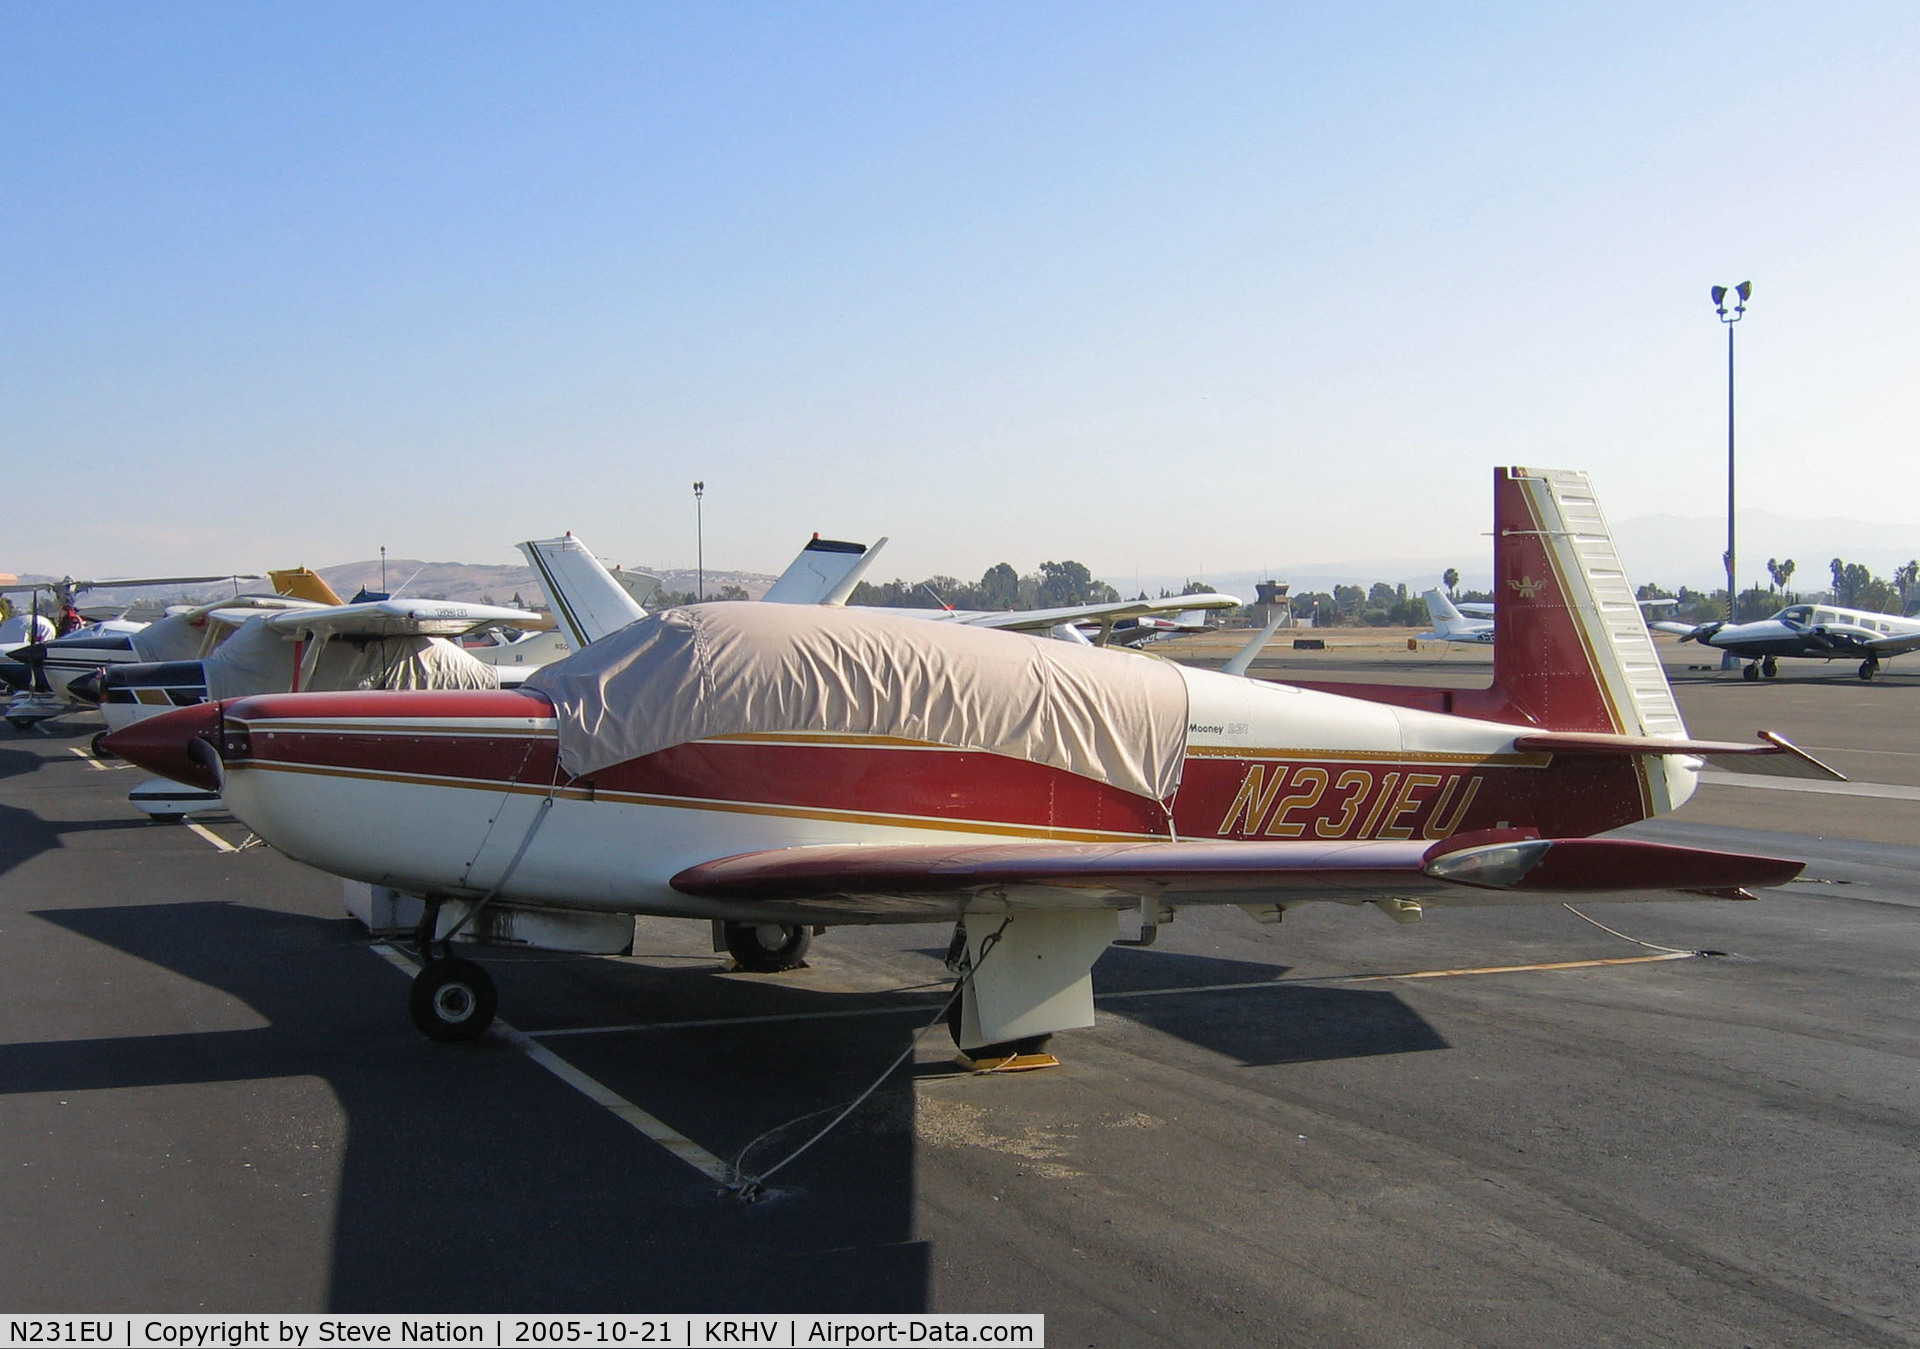 N231EU, 1979 Mooney M20K C/N 25-0208, Locally-based 1979 Mooney M20K with cockpit cover @ Reid-Hillview Airport, San Jose, CA